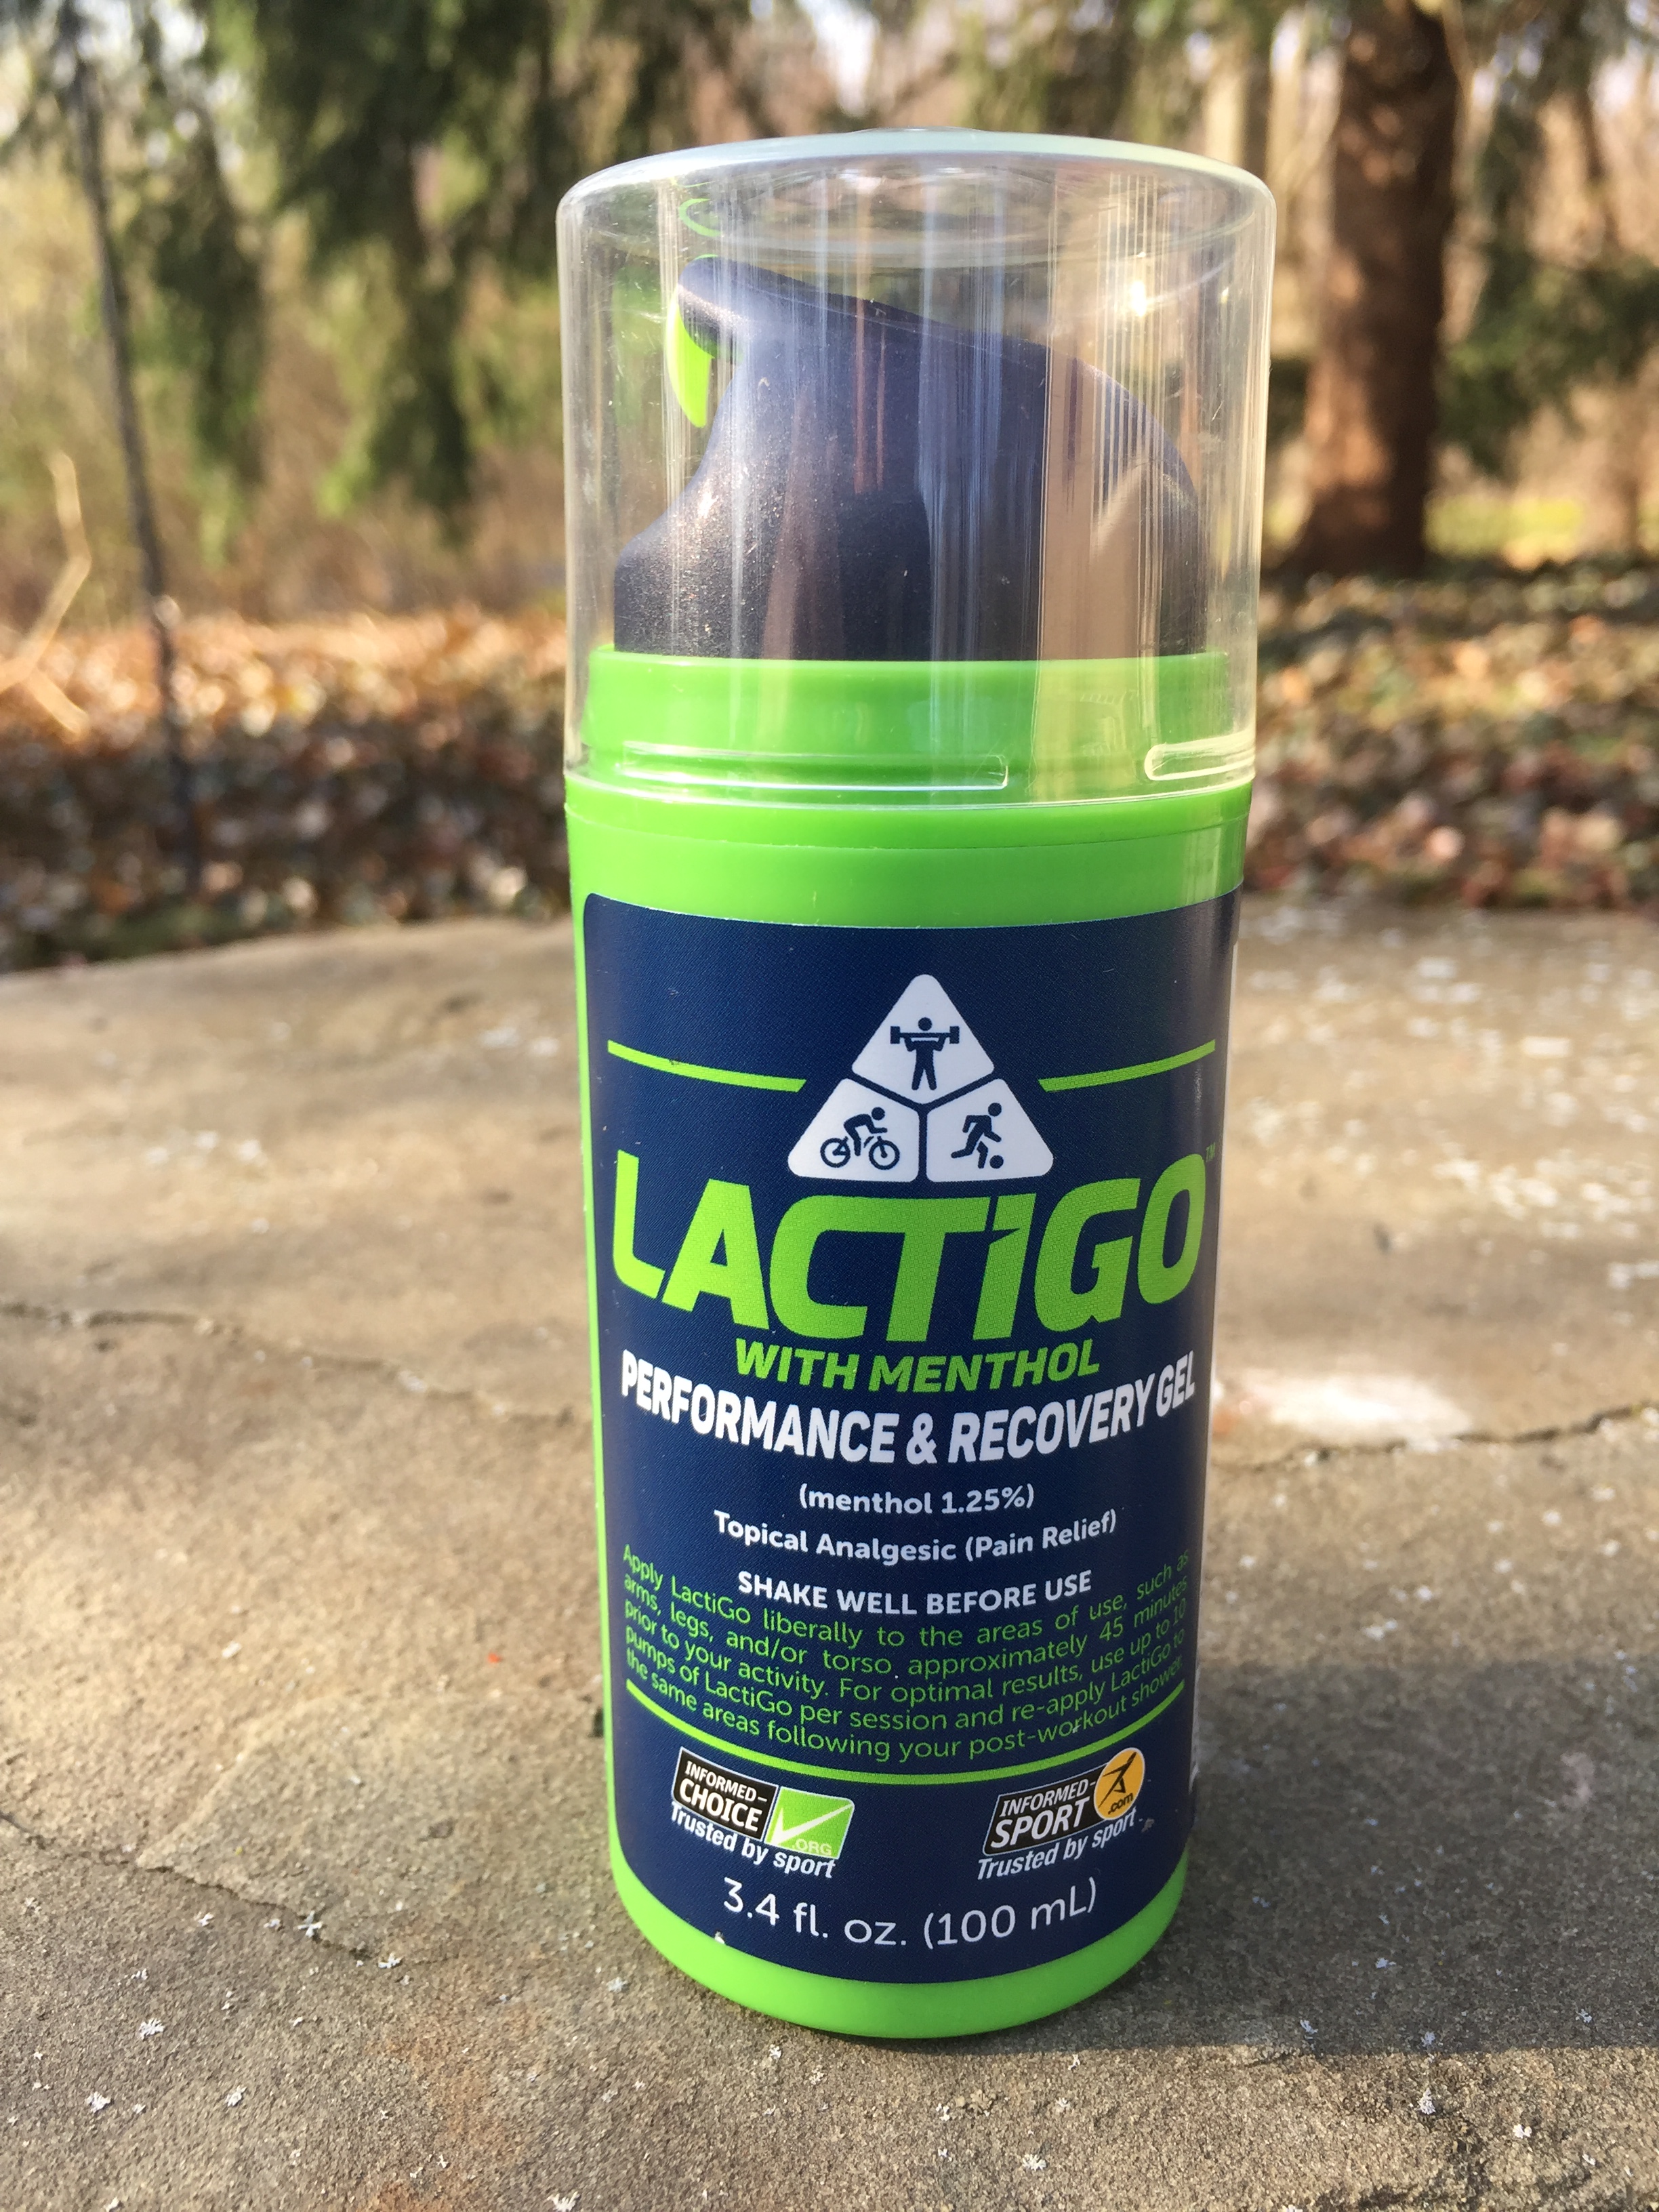 LactiGo Performance & Recovery Gel